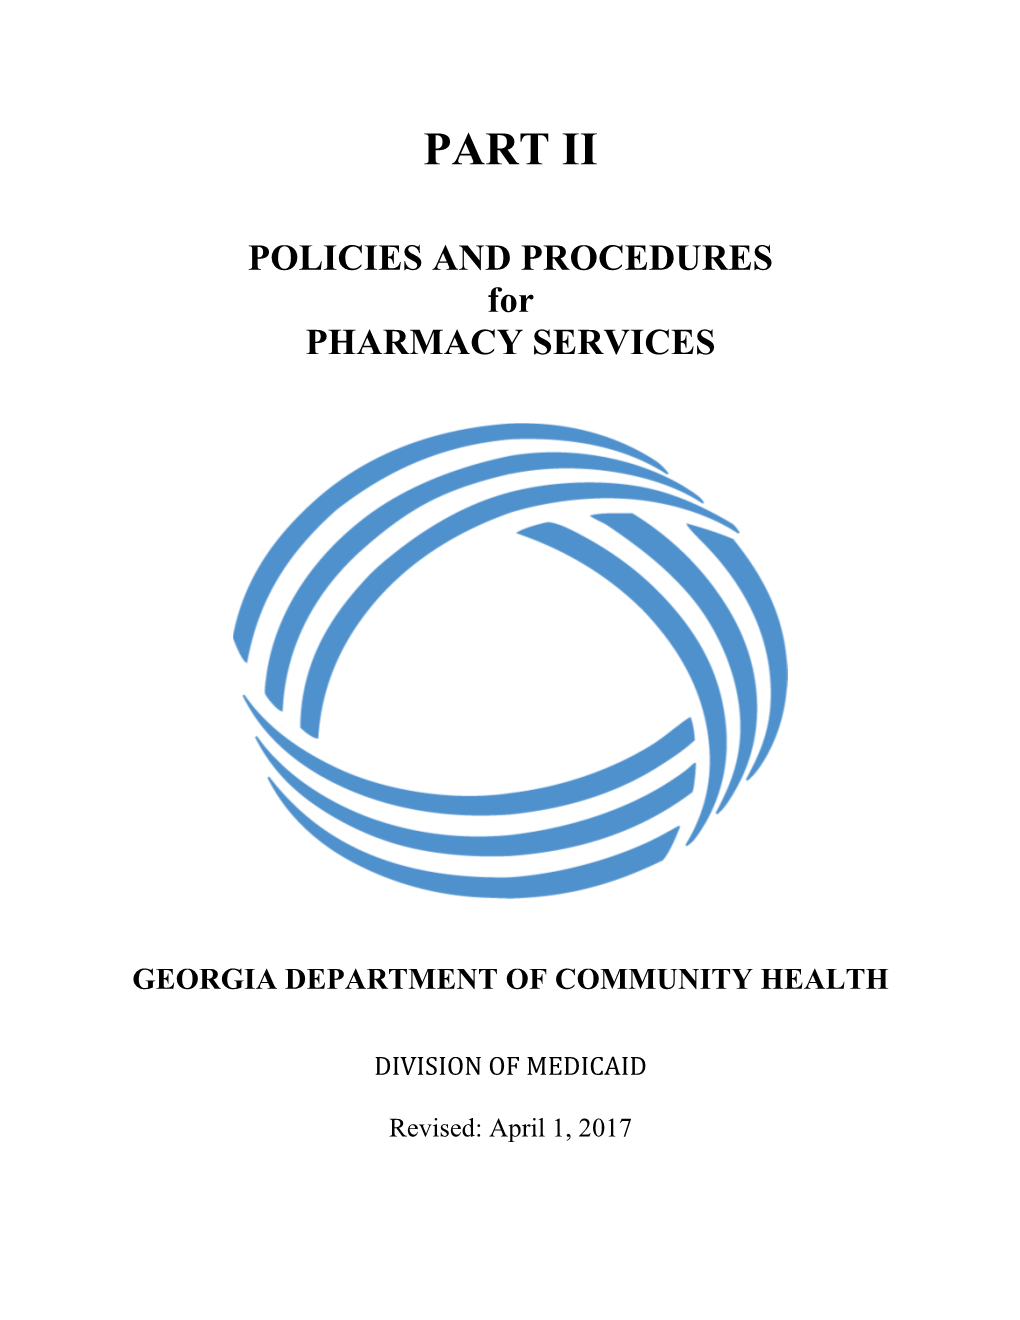 Medicaid Pharmacy Manual (April 2017)